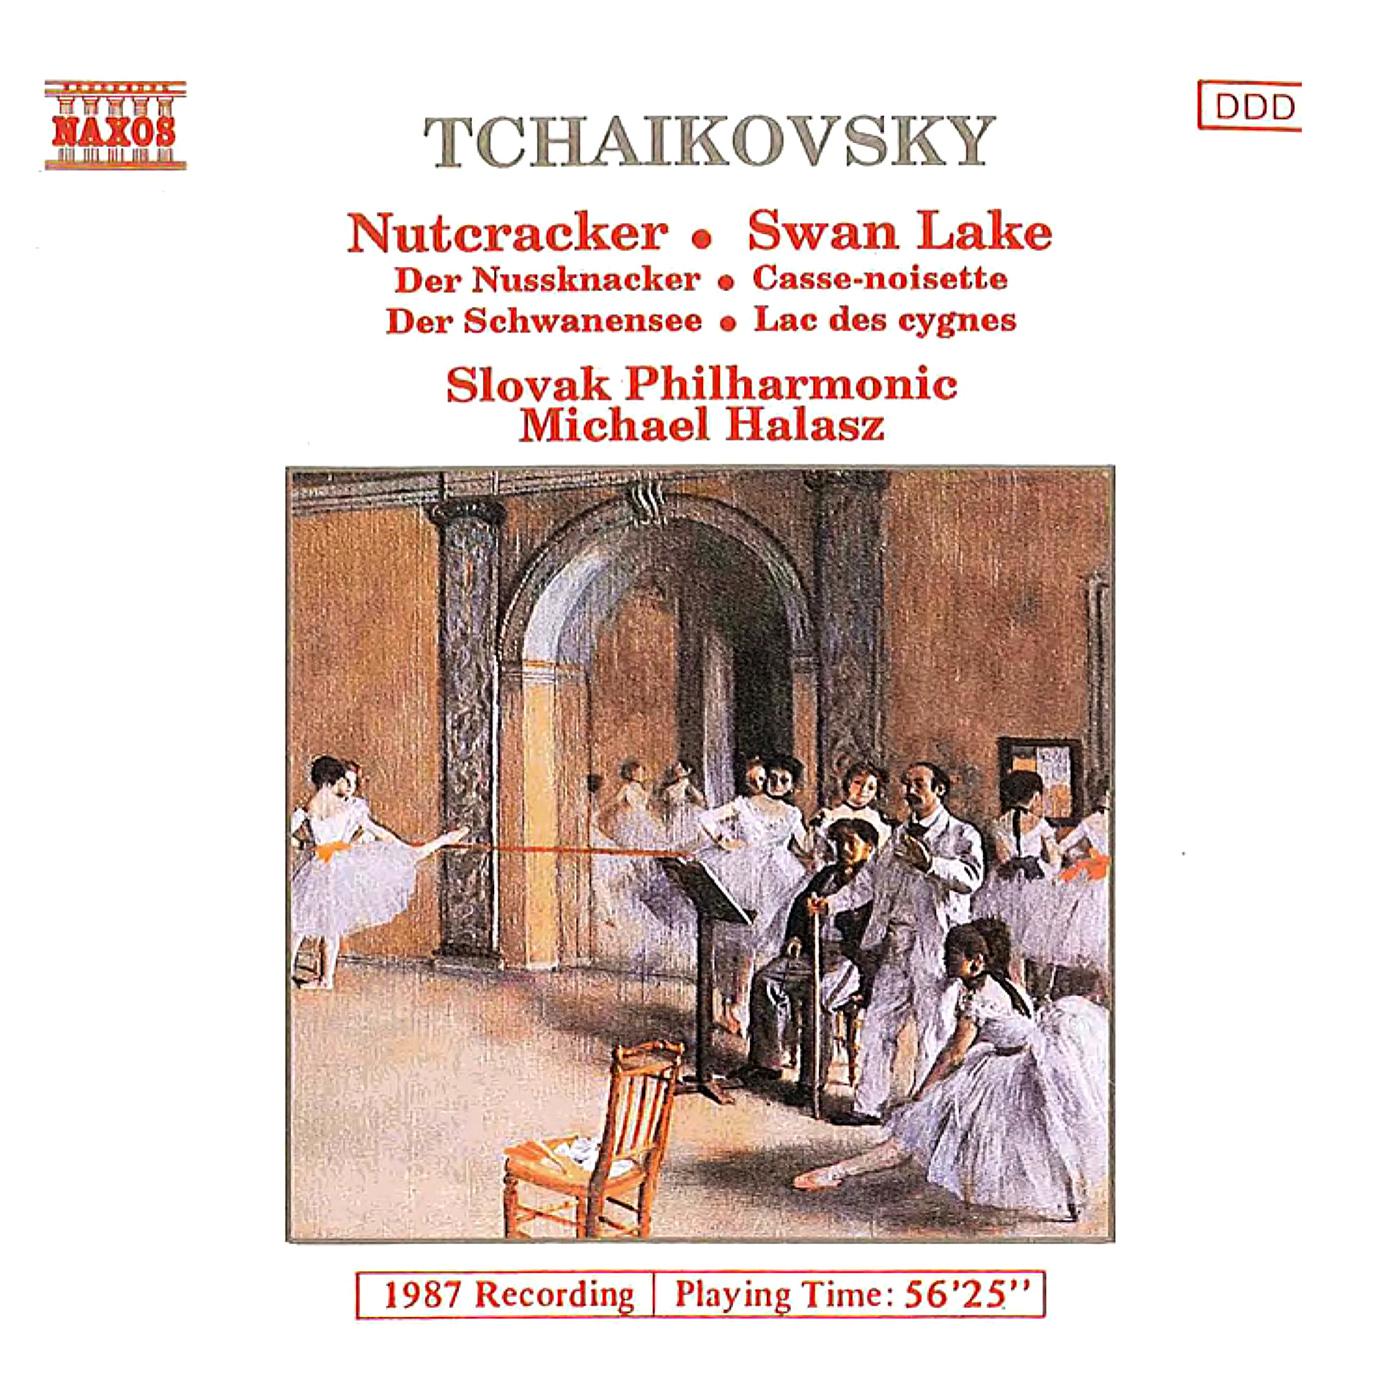 TCHAIKOVSKY: Nutcracker (The) / Swan Lake (excerpts)